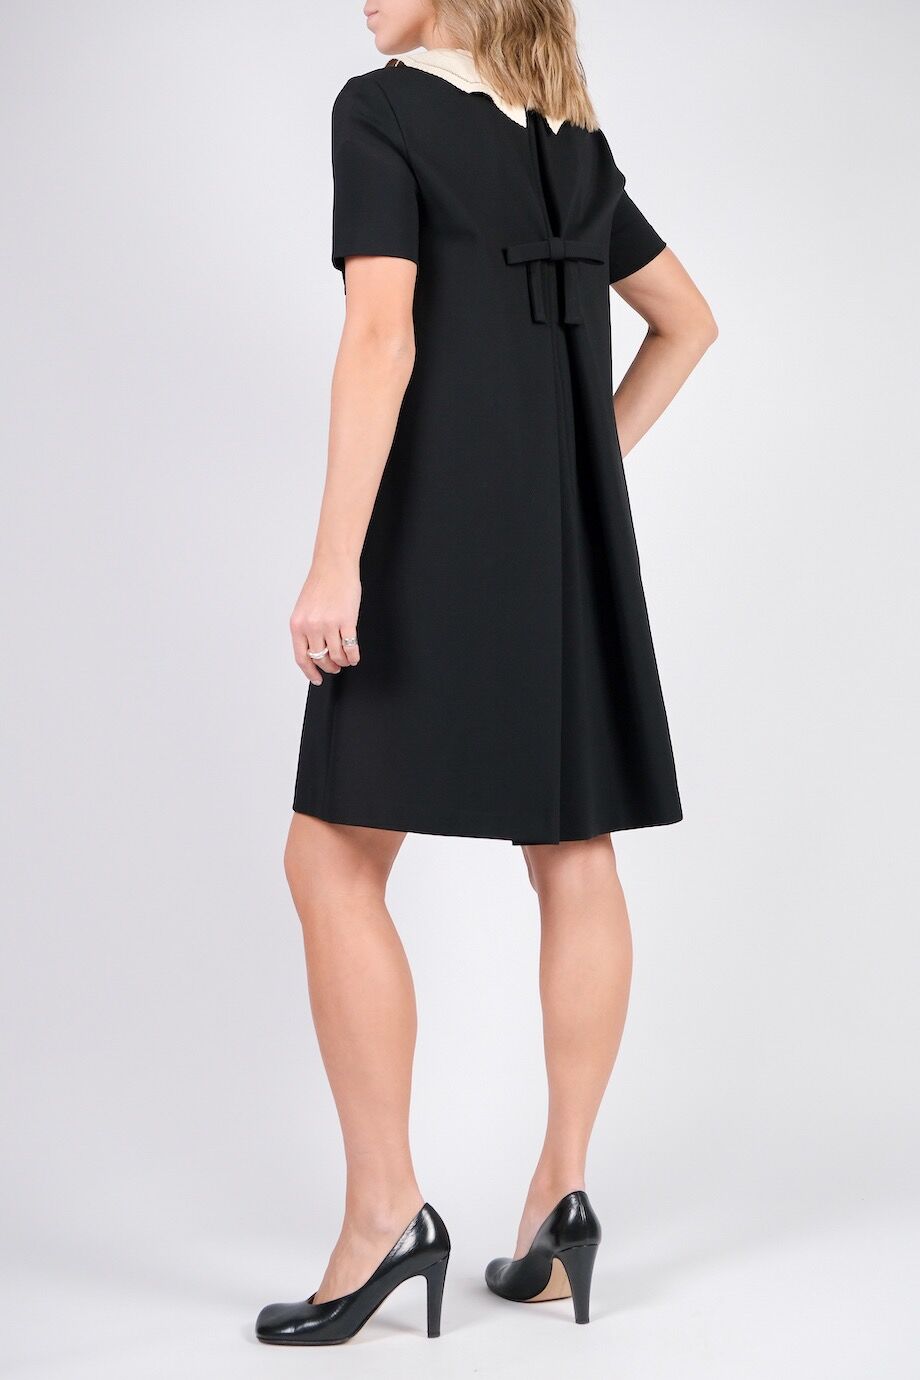 image 3 Платье чёрного цвета со светлым  воротничком